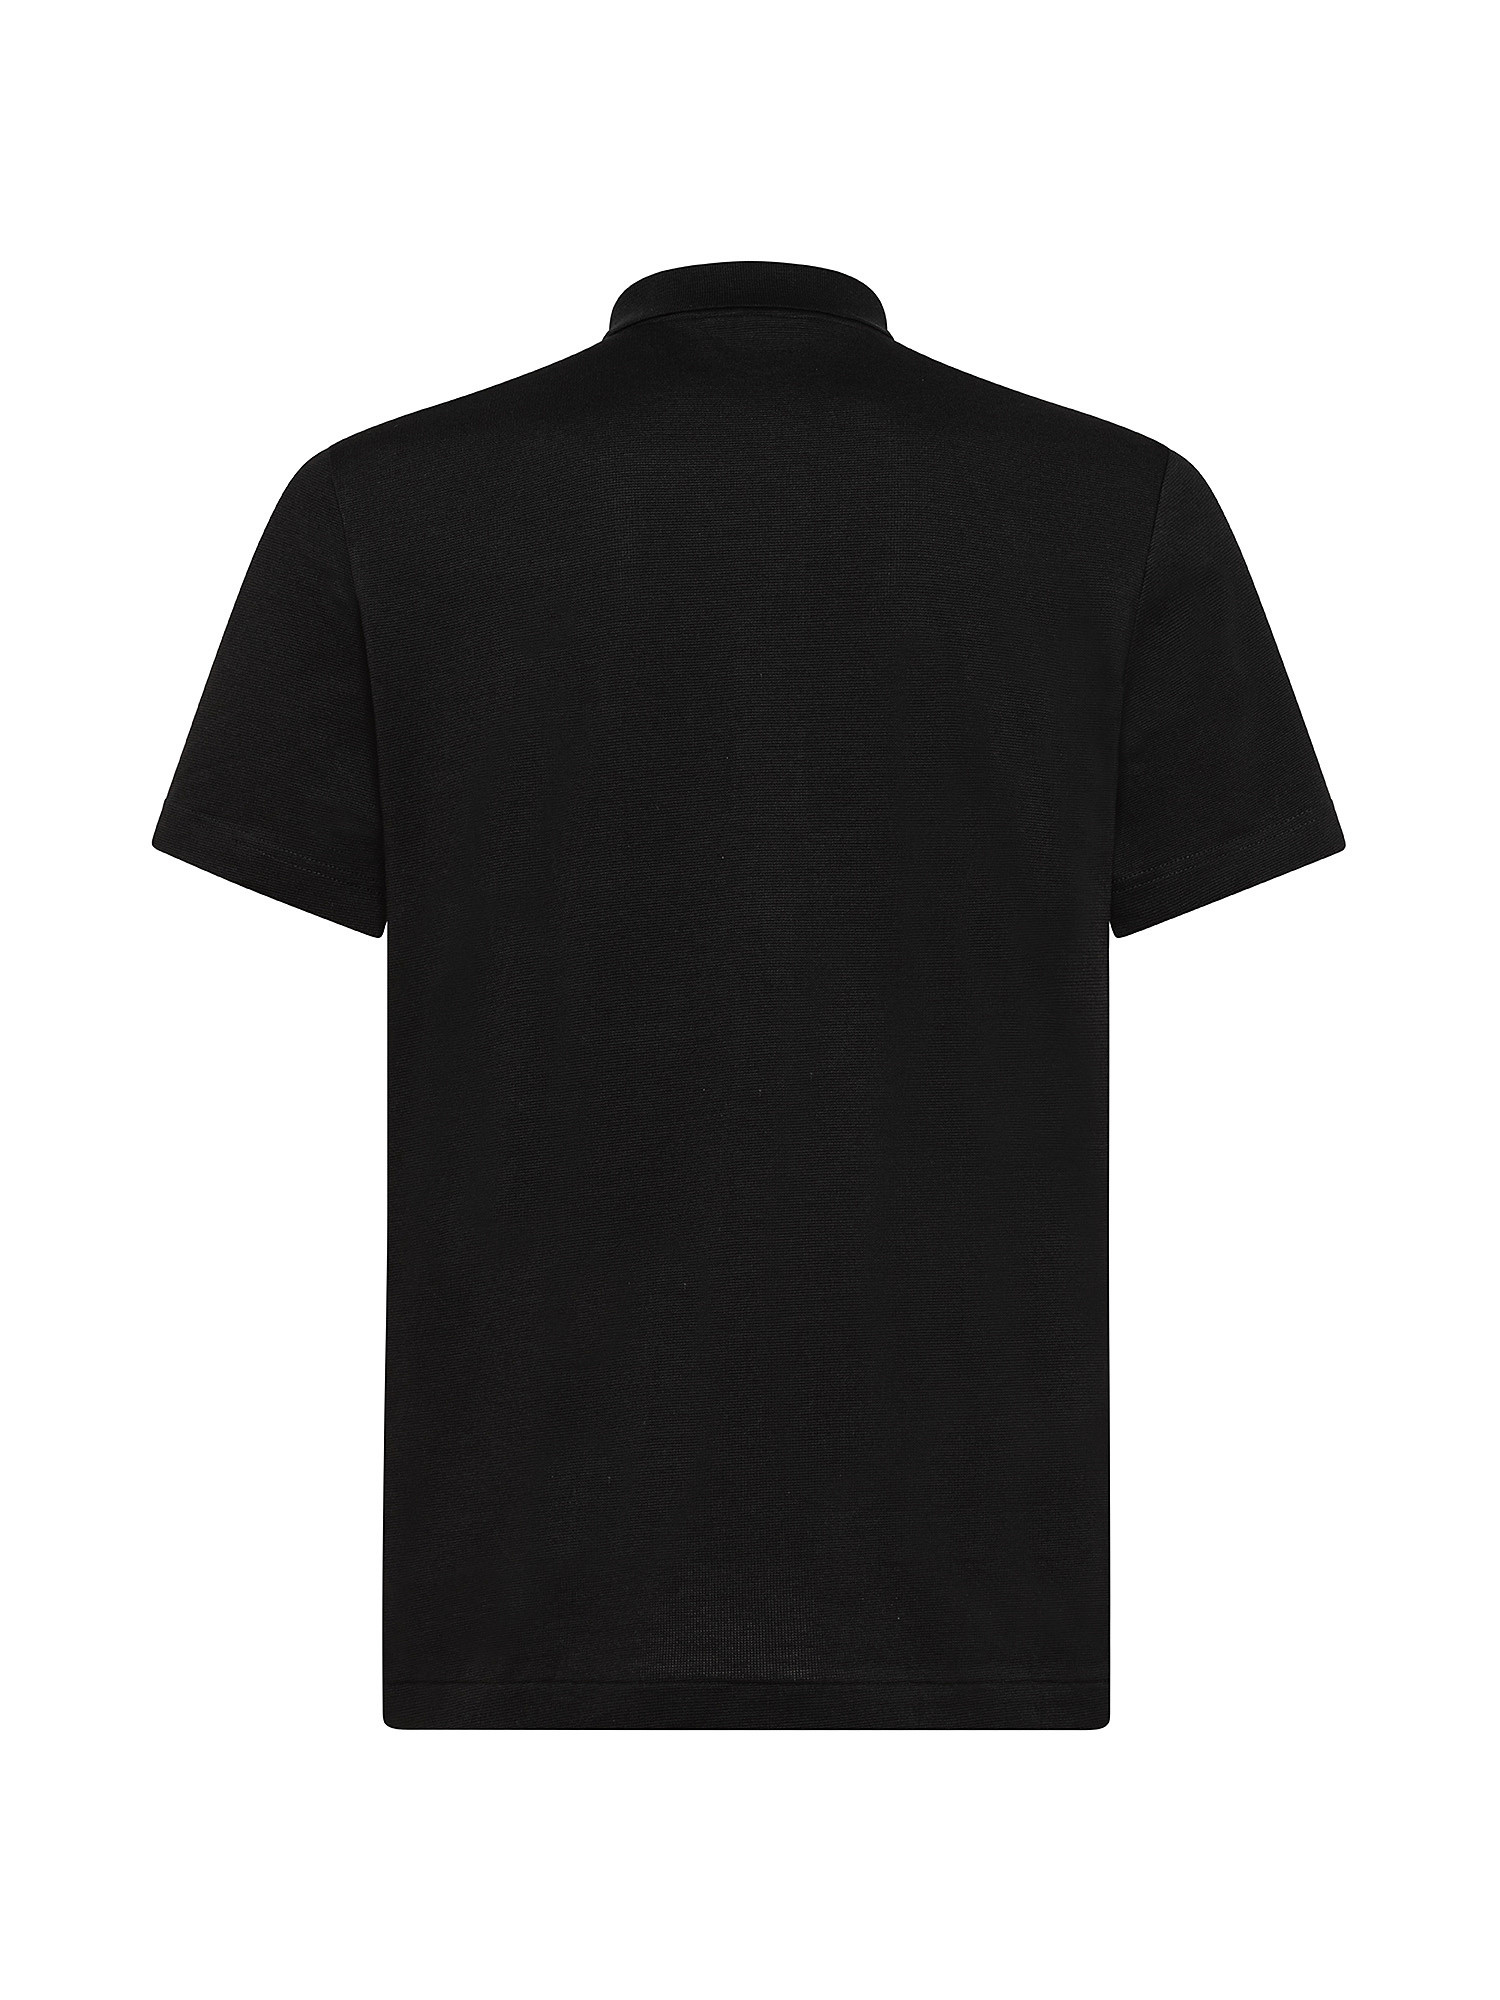 Polo shirt, Black, large image number 1